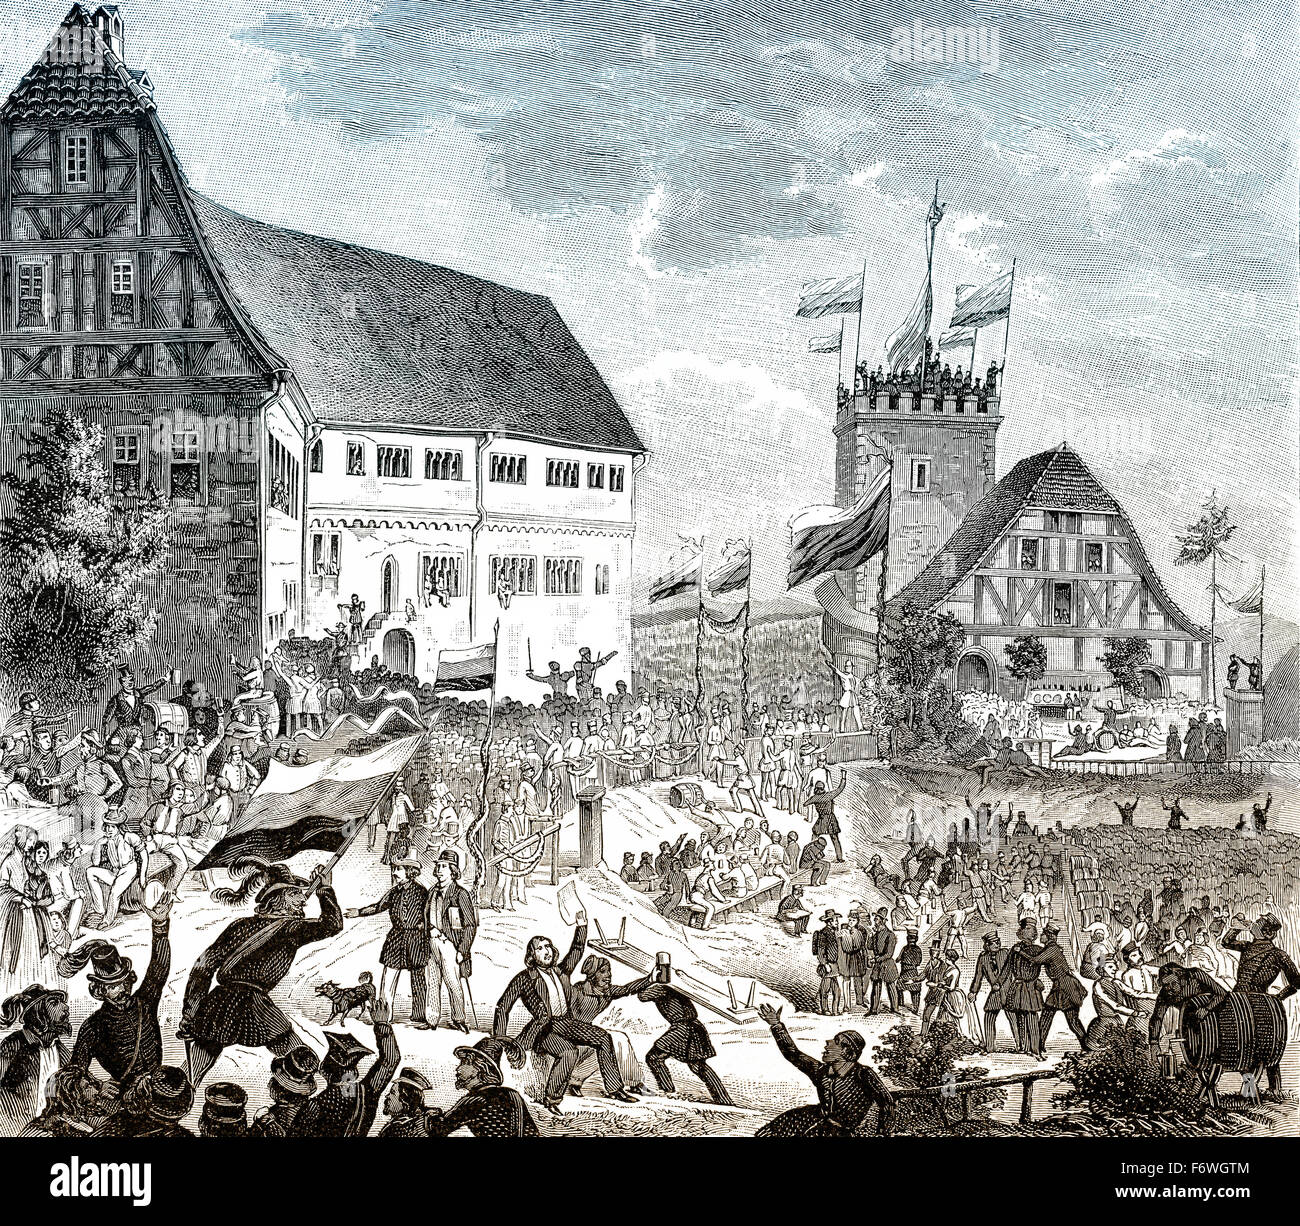 Il secondo festival di Wartburg o Wartburgfest, 1848, Castello di Wartburg, Eisenach, Germania, Das zweite Wartburgfest vom 12. Juni 184 Foto Stock